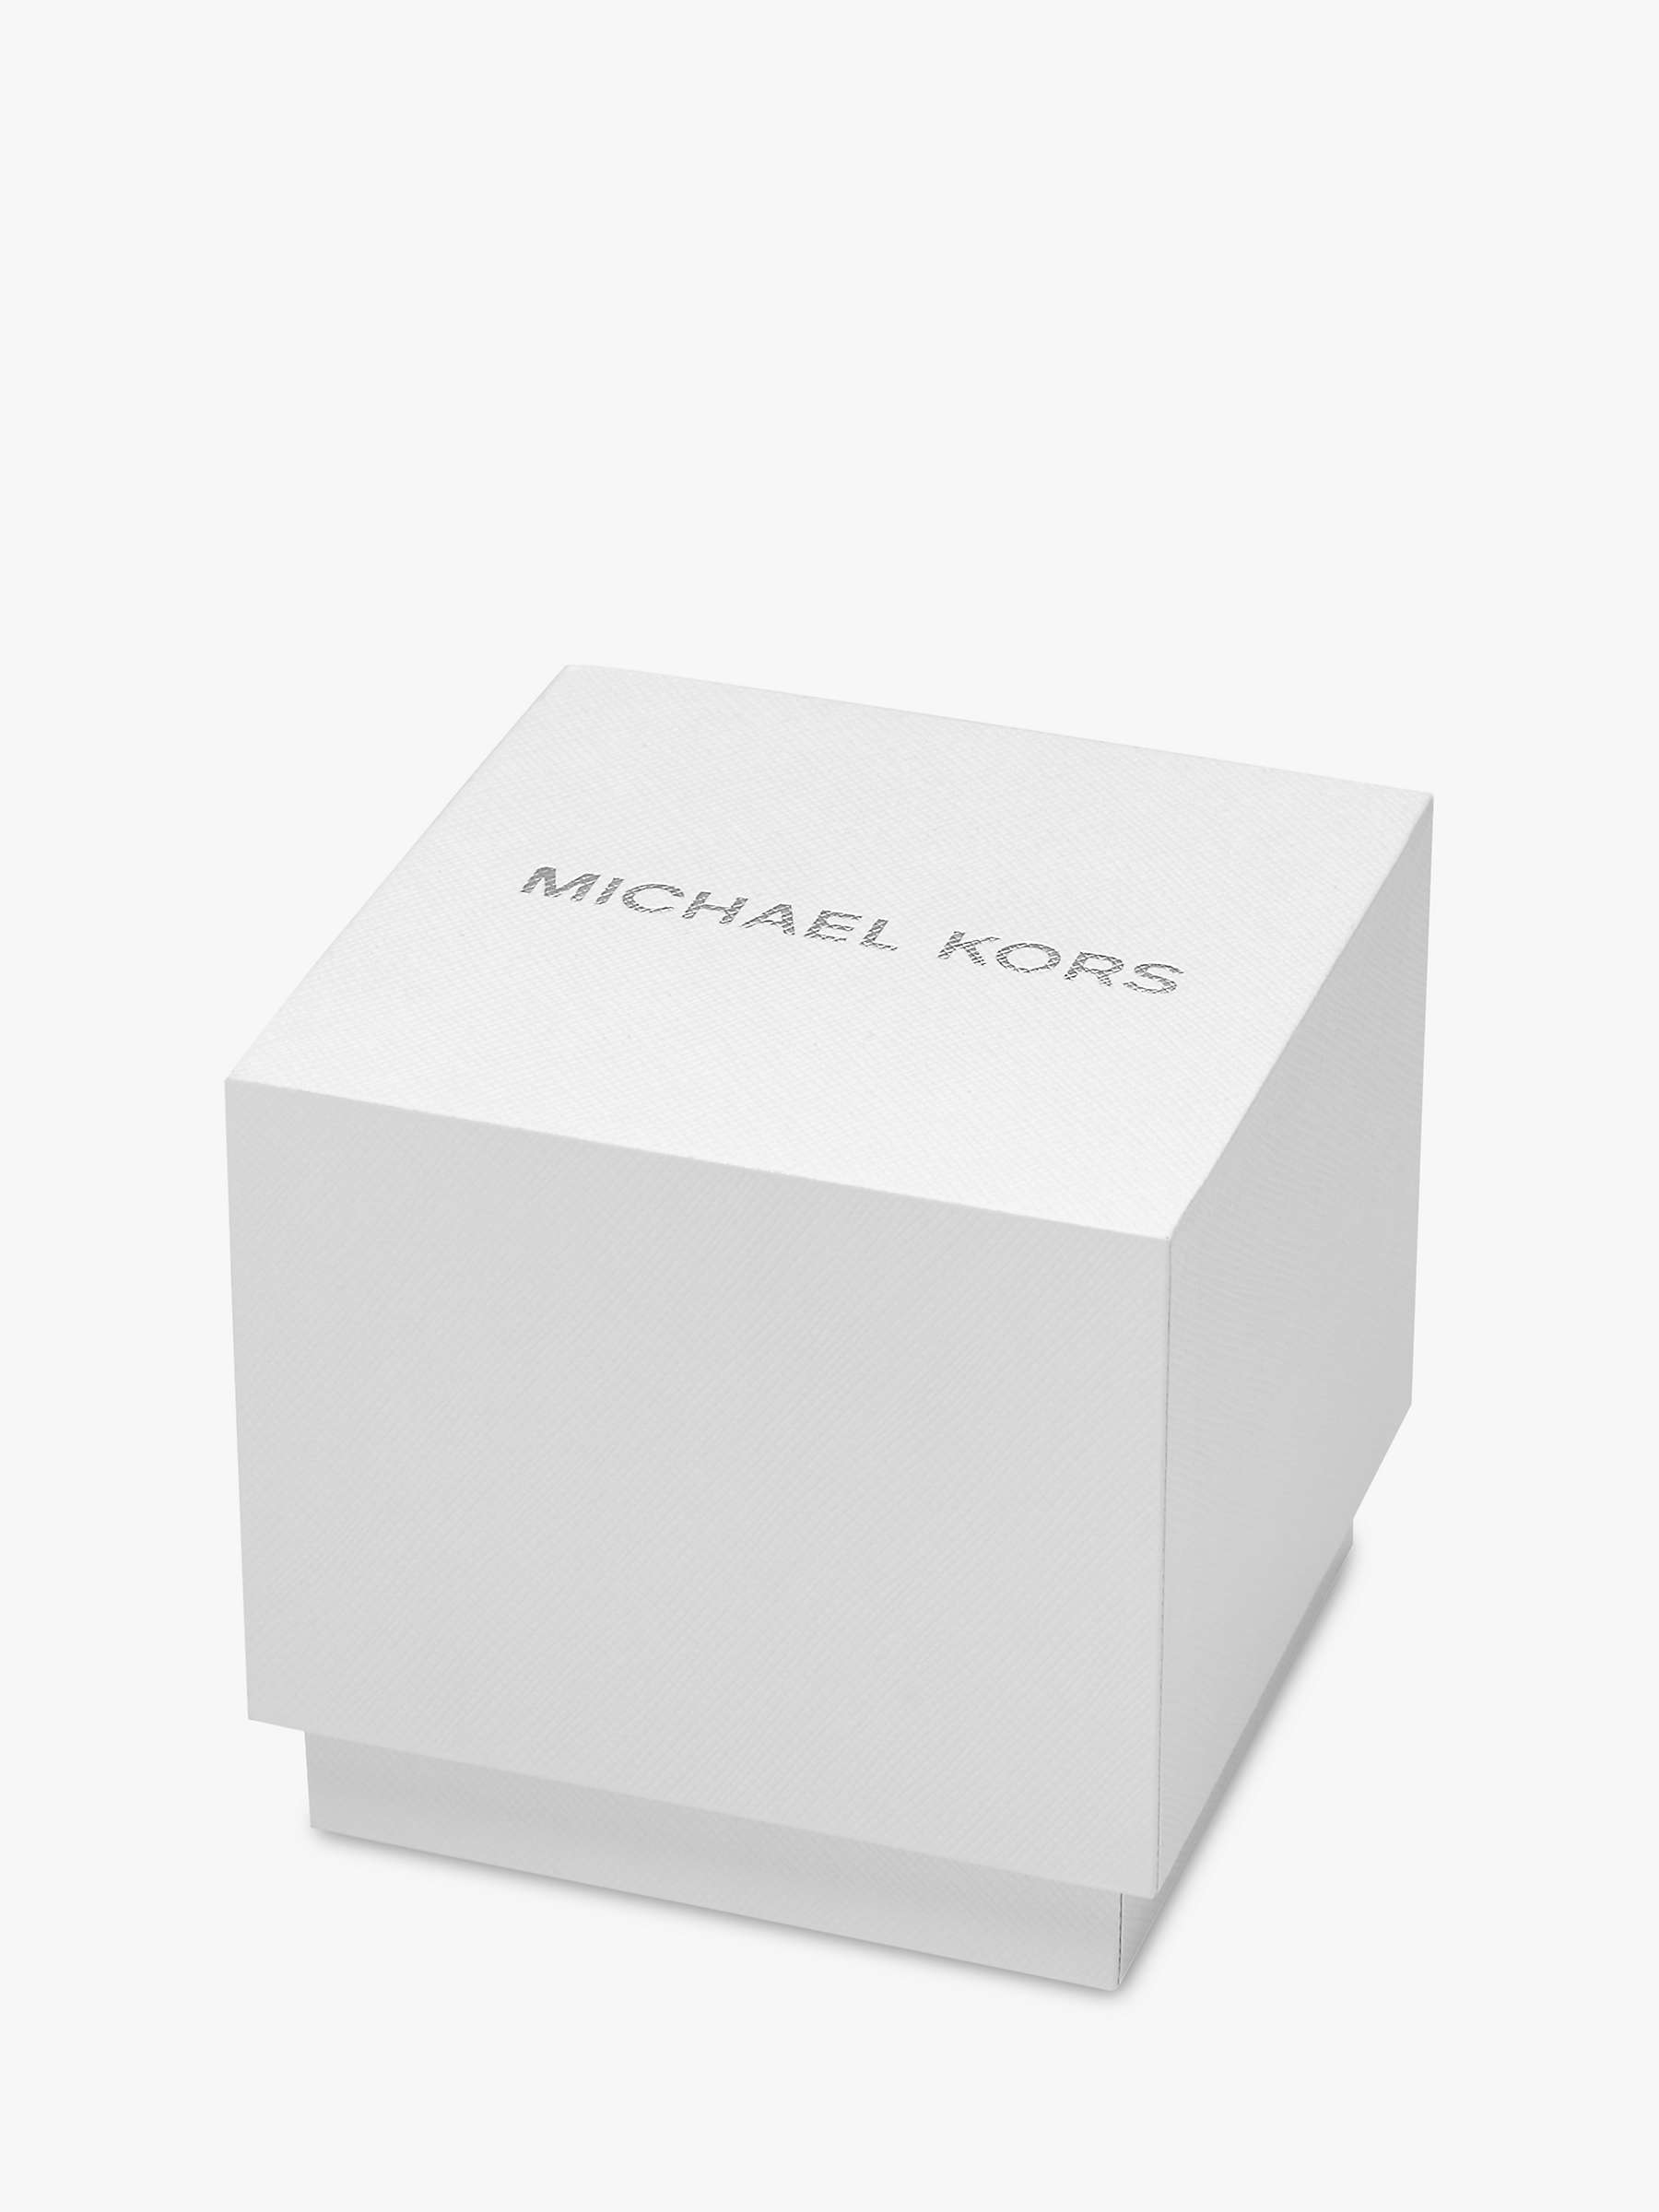 Buy Michael Kors Empire Chain Link Bracelet Watch Online at johnlewis.com